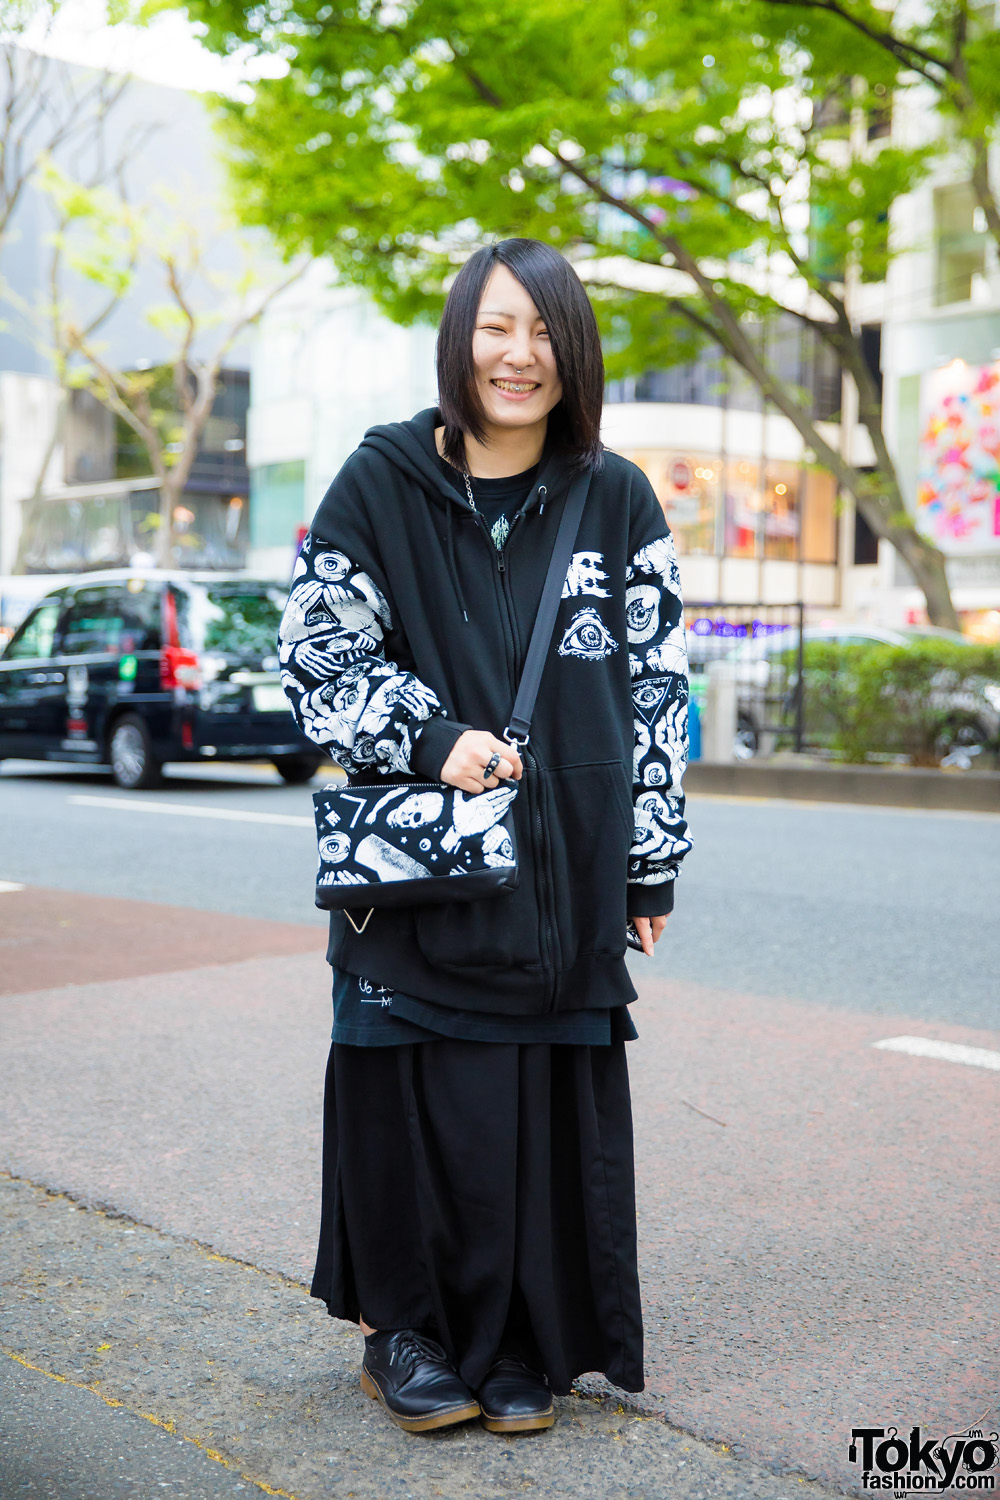 Monochrome Print Street Style w/ M:E Hoodie Jacket, Long Skirt, Lace-Up Shoes & Crossbody Bag